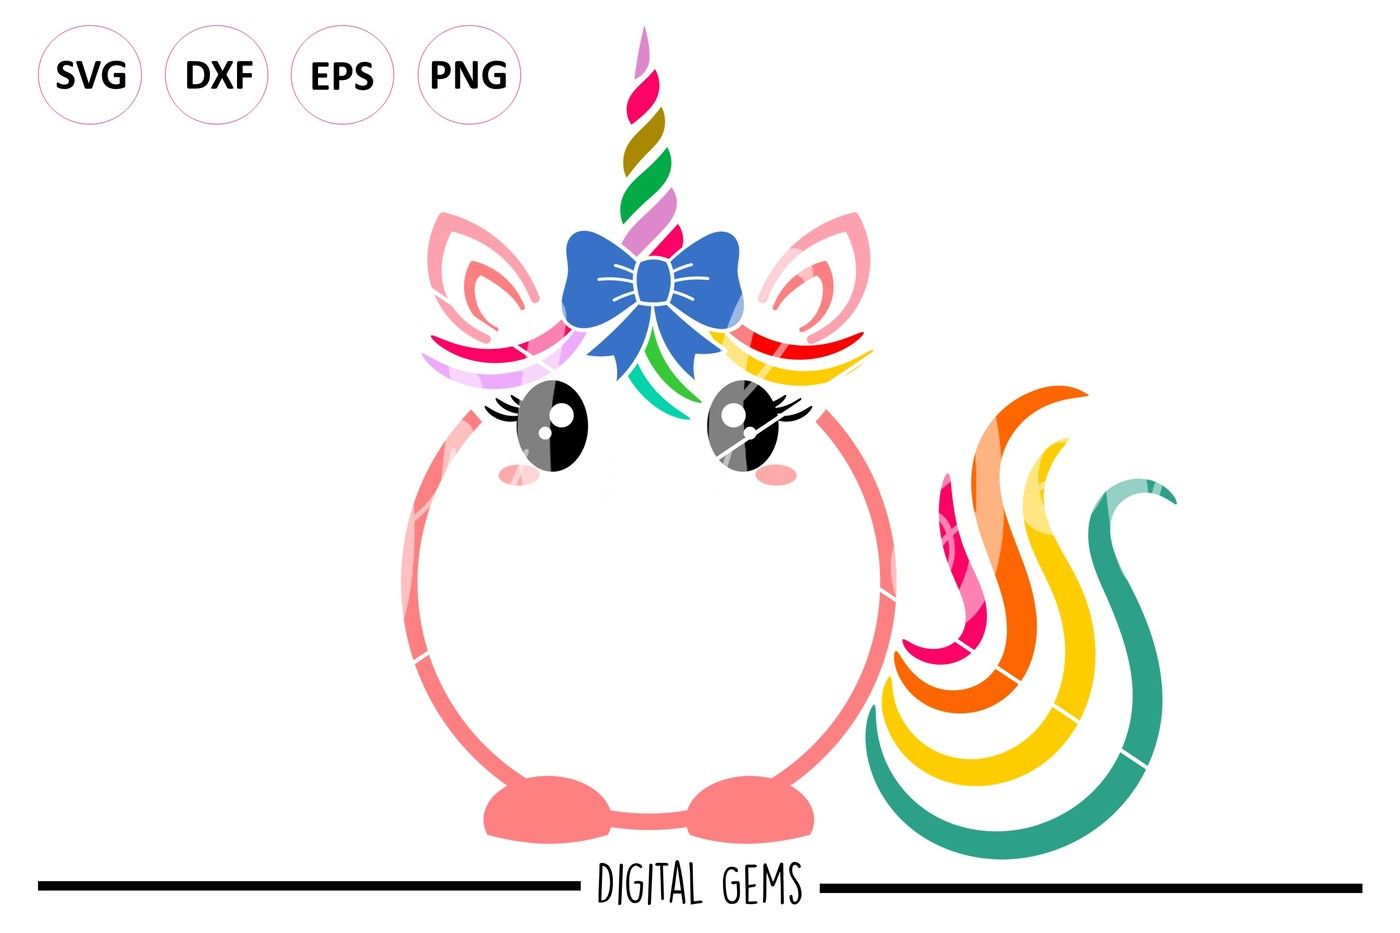 Unicorn SVG / DXF / EPS / PNG Files By Digital Gems | TheHungryJPEG.com